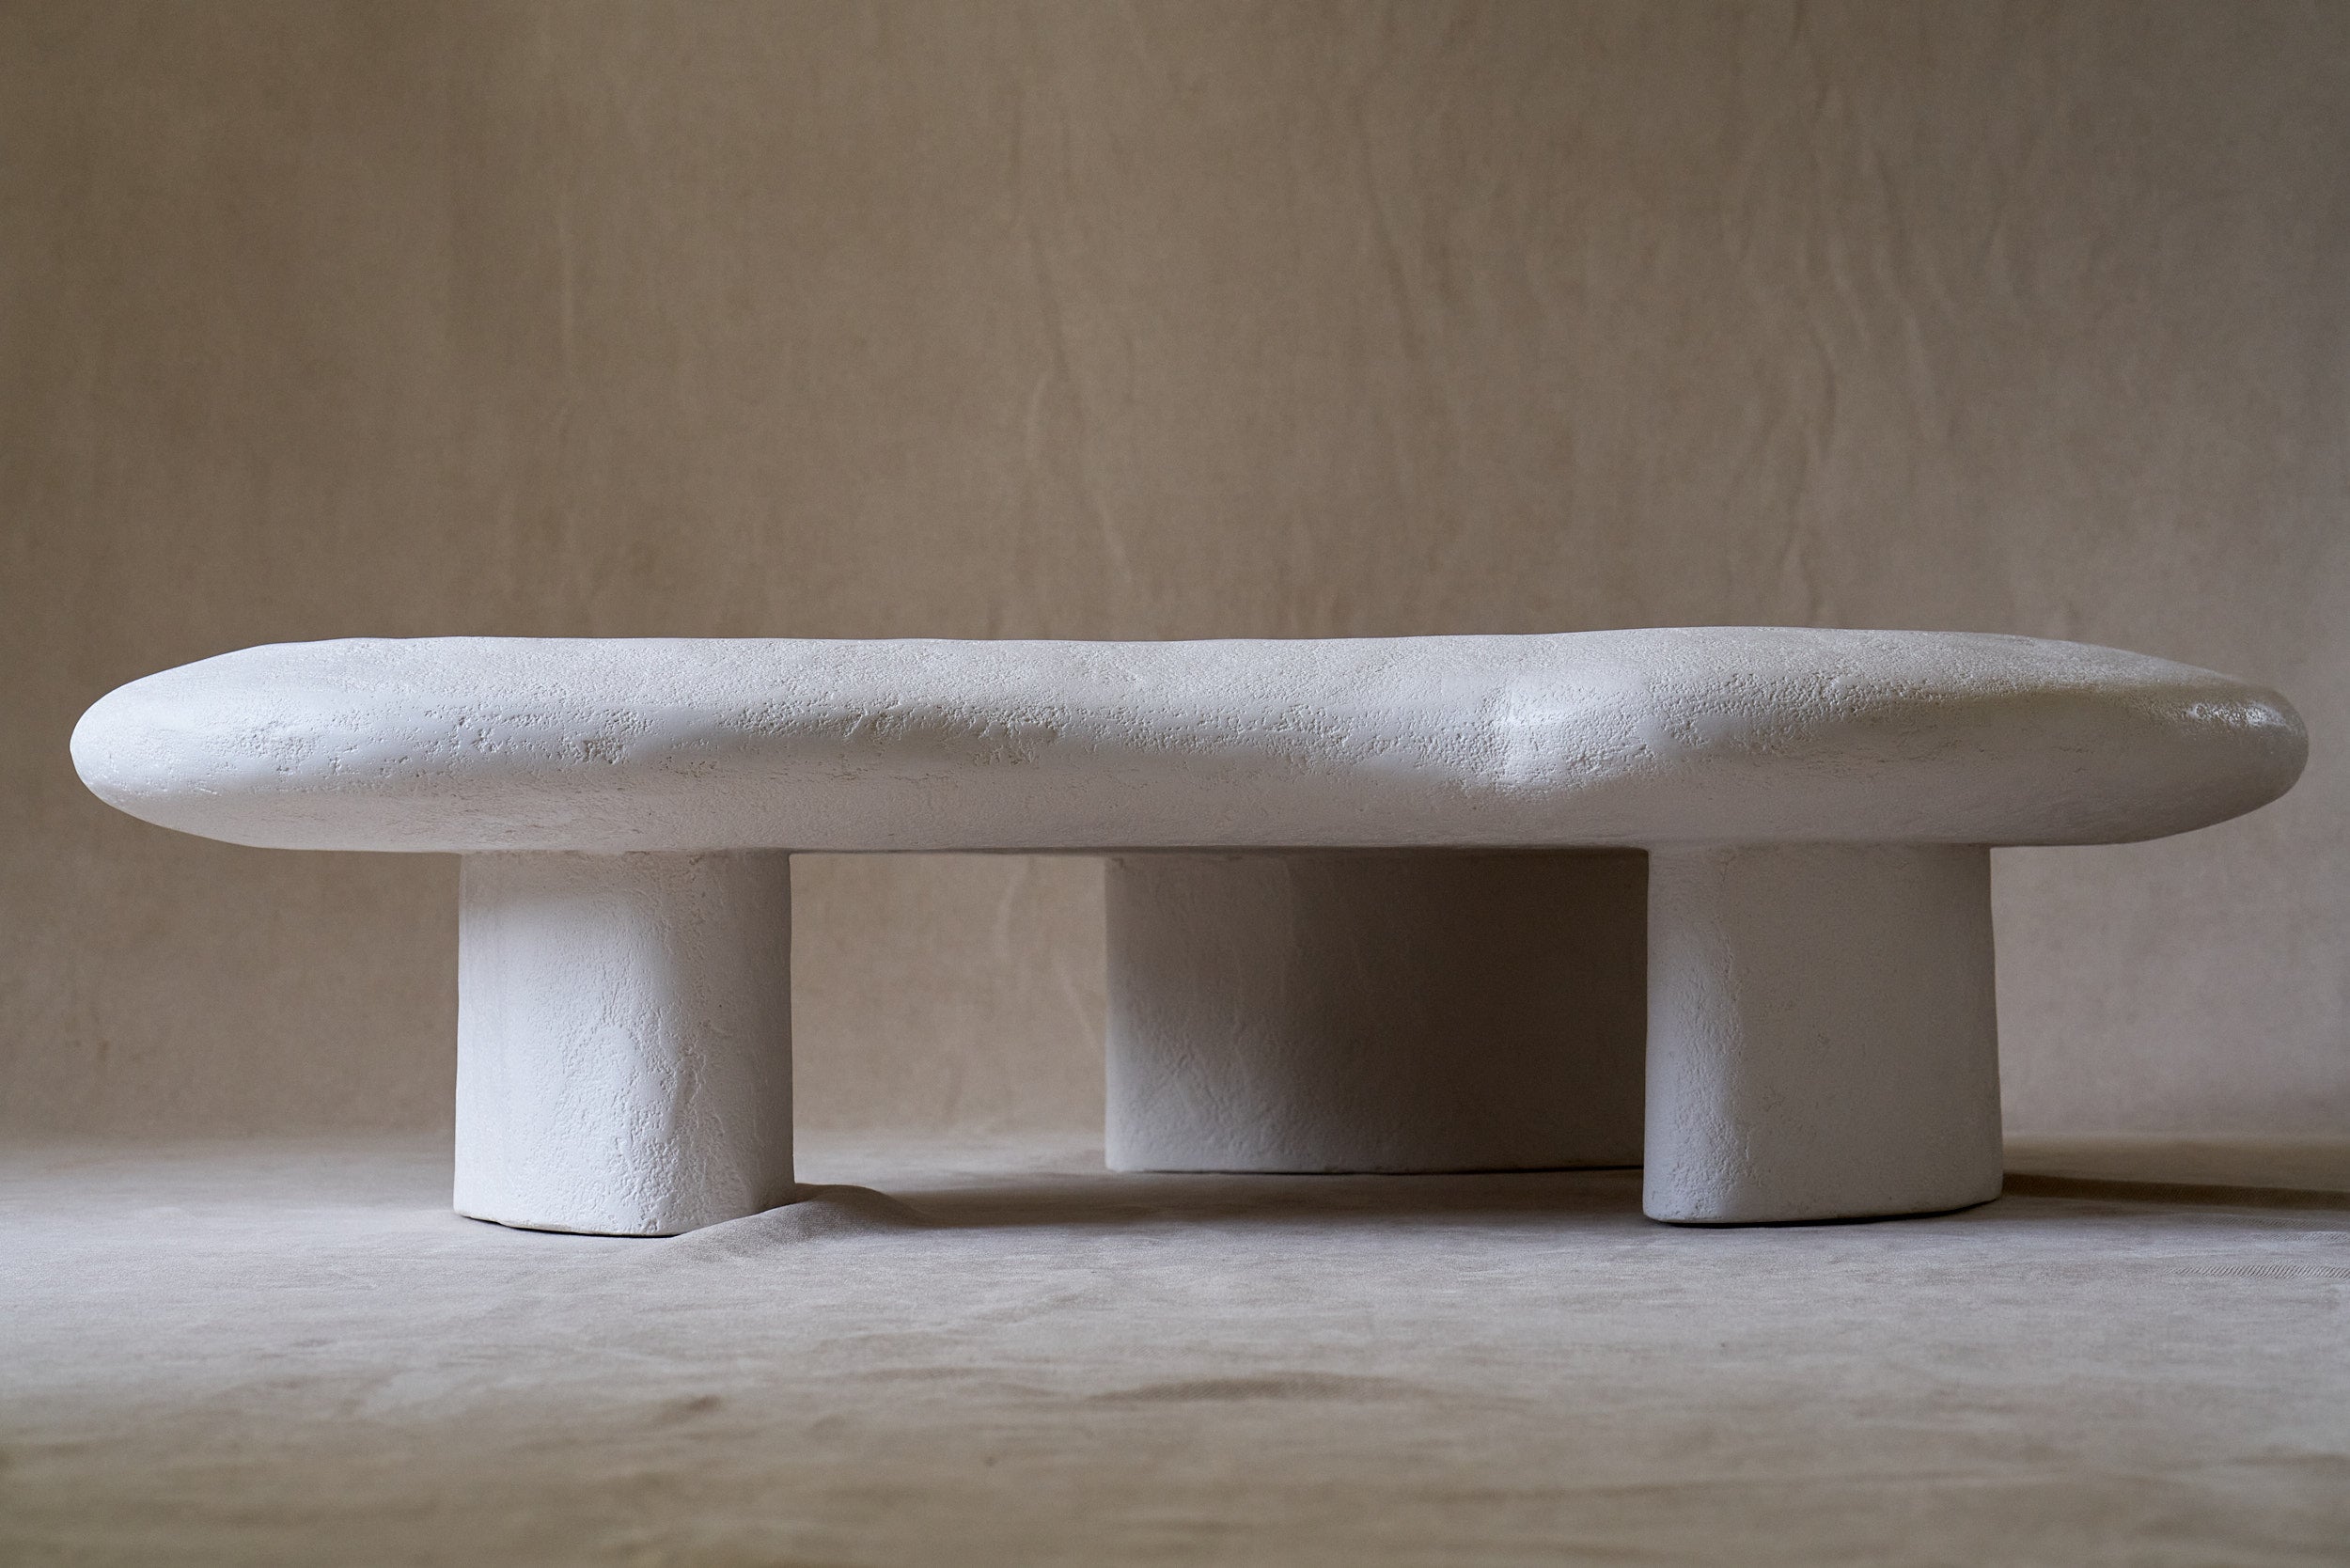 Sculptural organic modern low coffee table